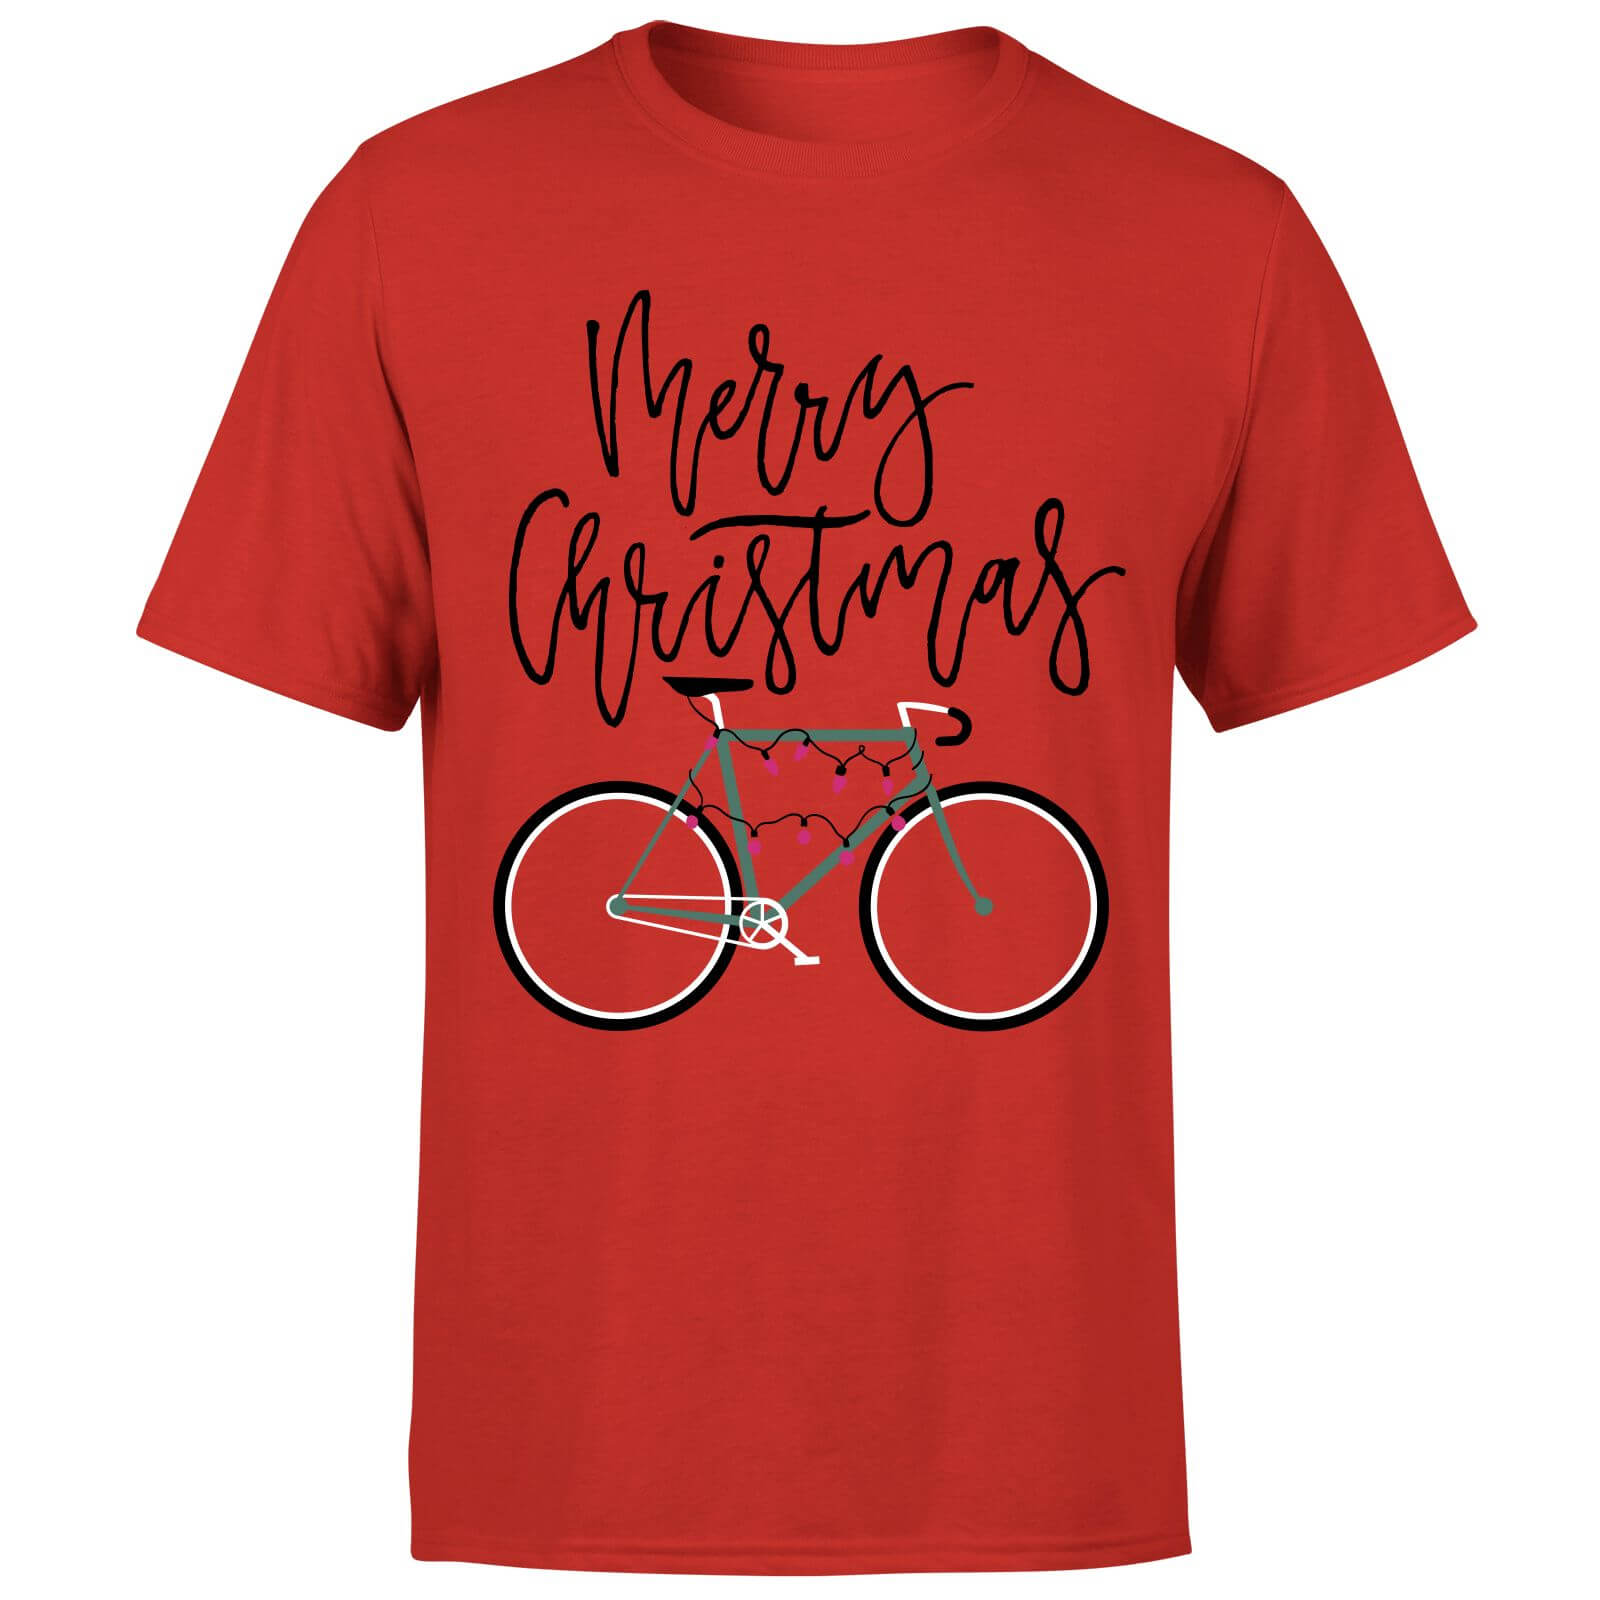 Bike Lights Men's Christmas T-Shirt - Red - XL - Red